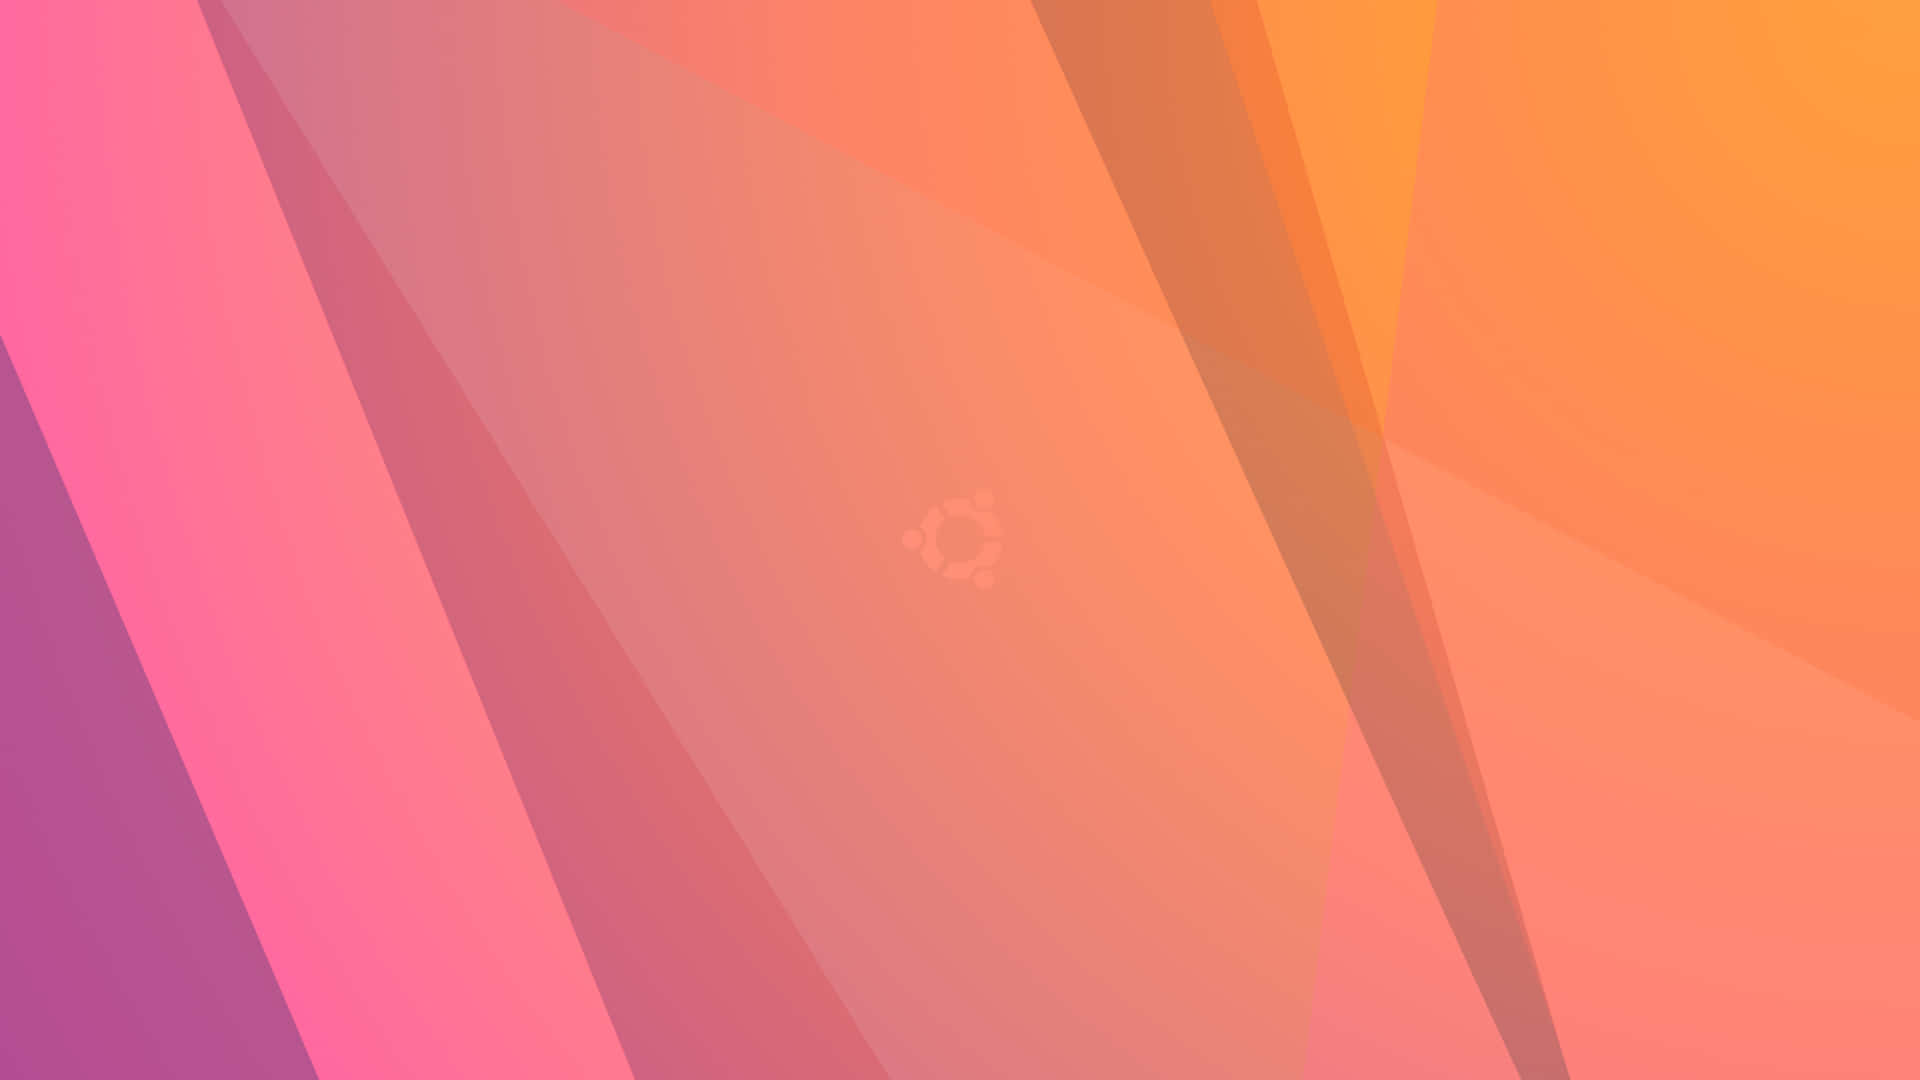 Beautifully designed Ubuntu desktop